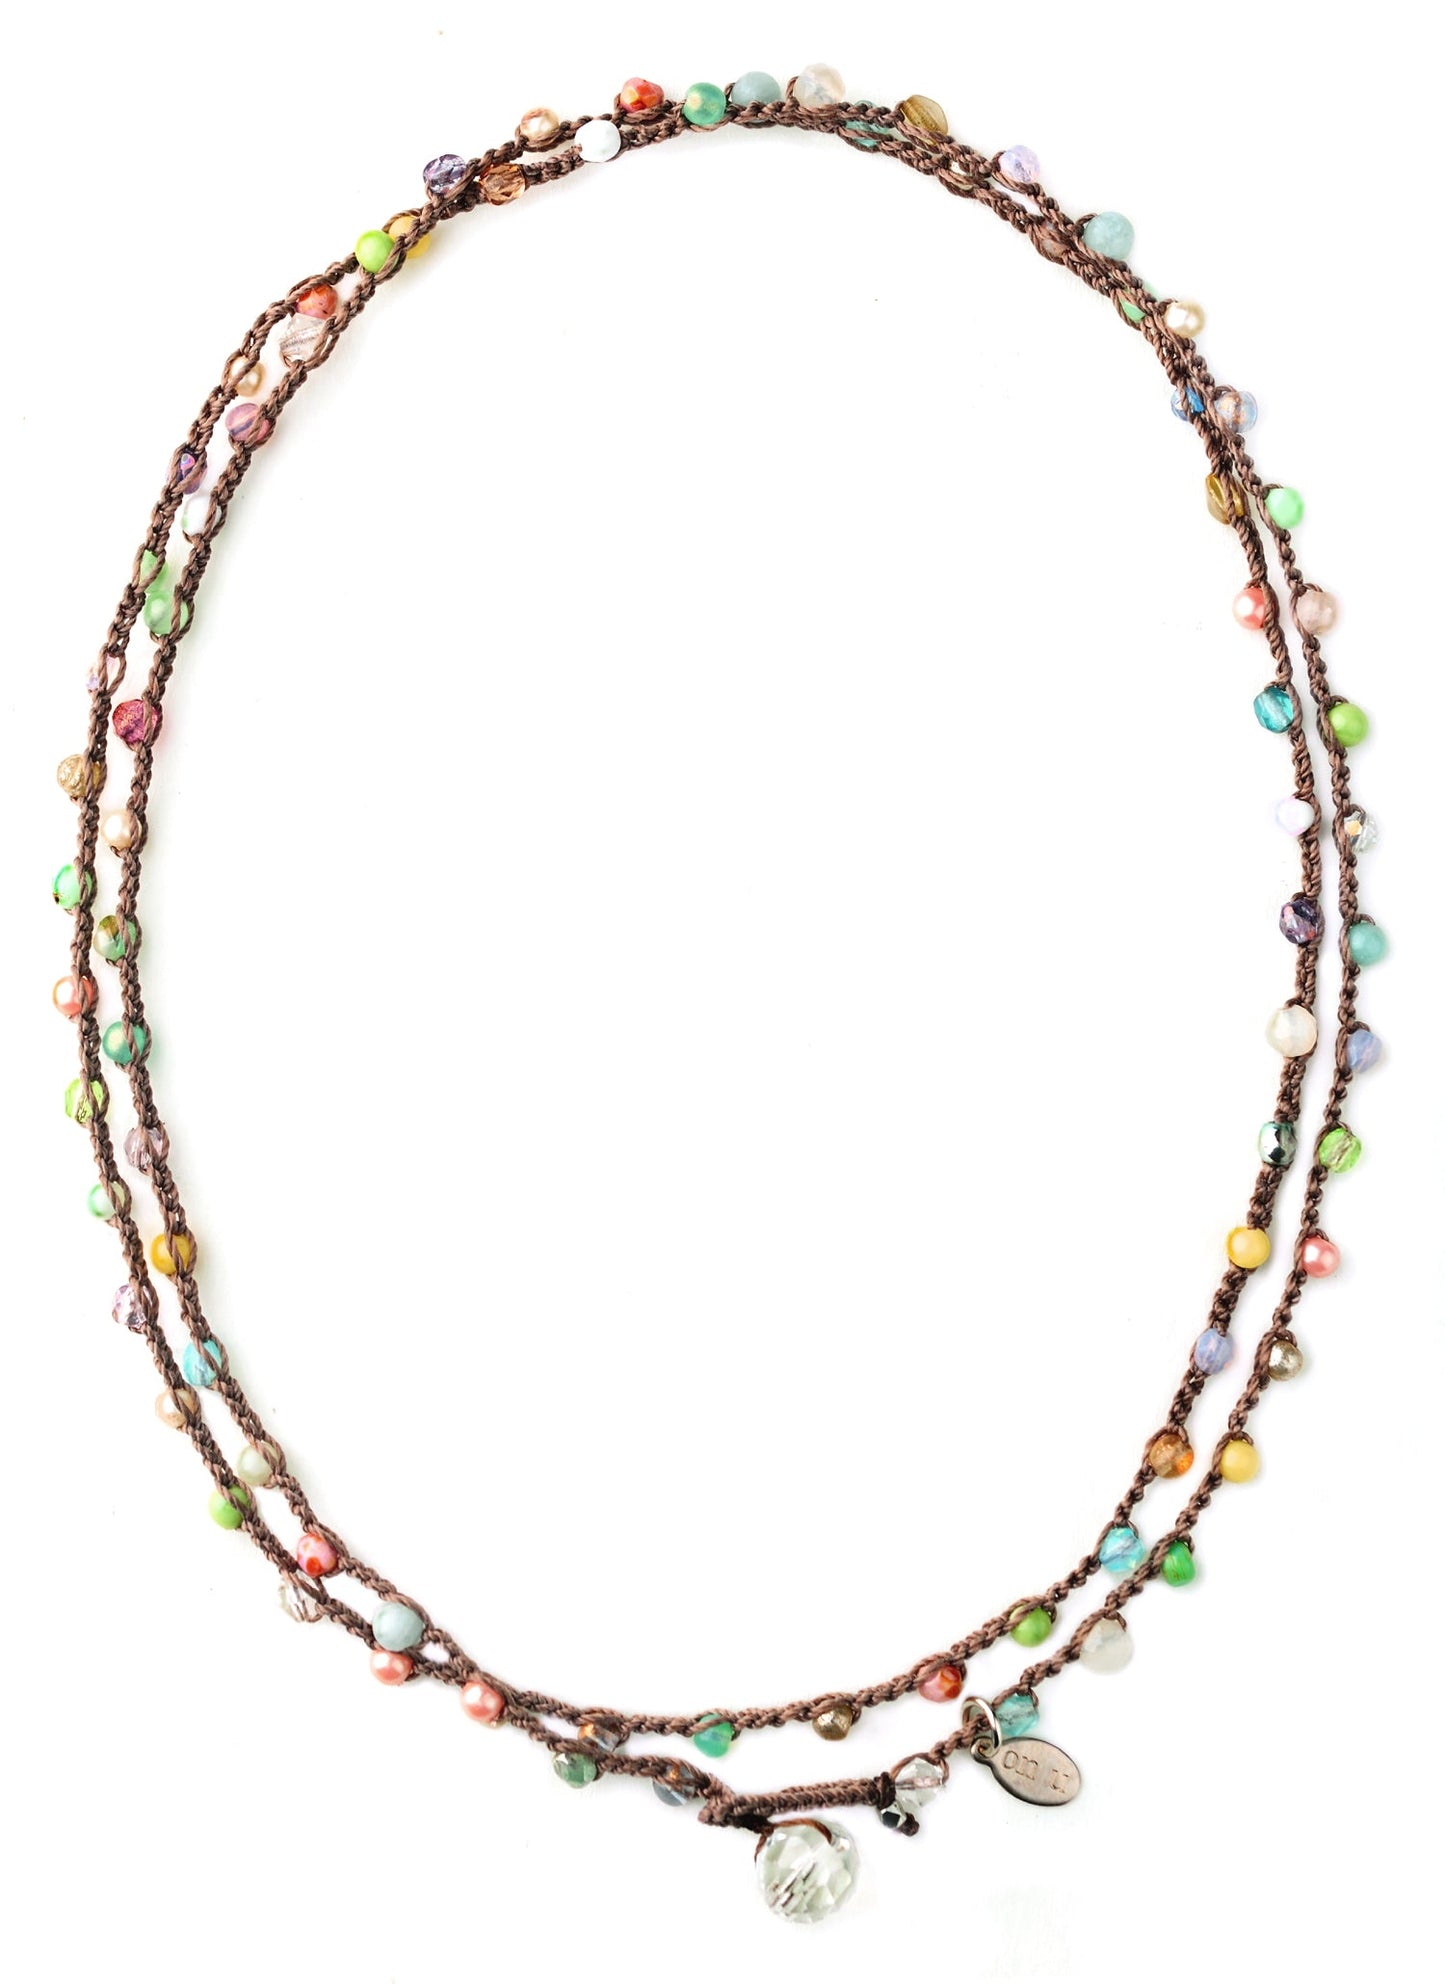 onujewelry.com - 24/7 hand-crocheted necklace Soft Palette version created by Donna Silvestri, On U Jewelry, Richmond, VA